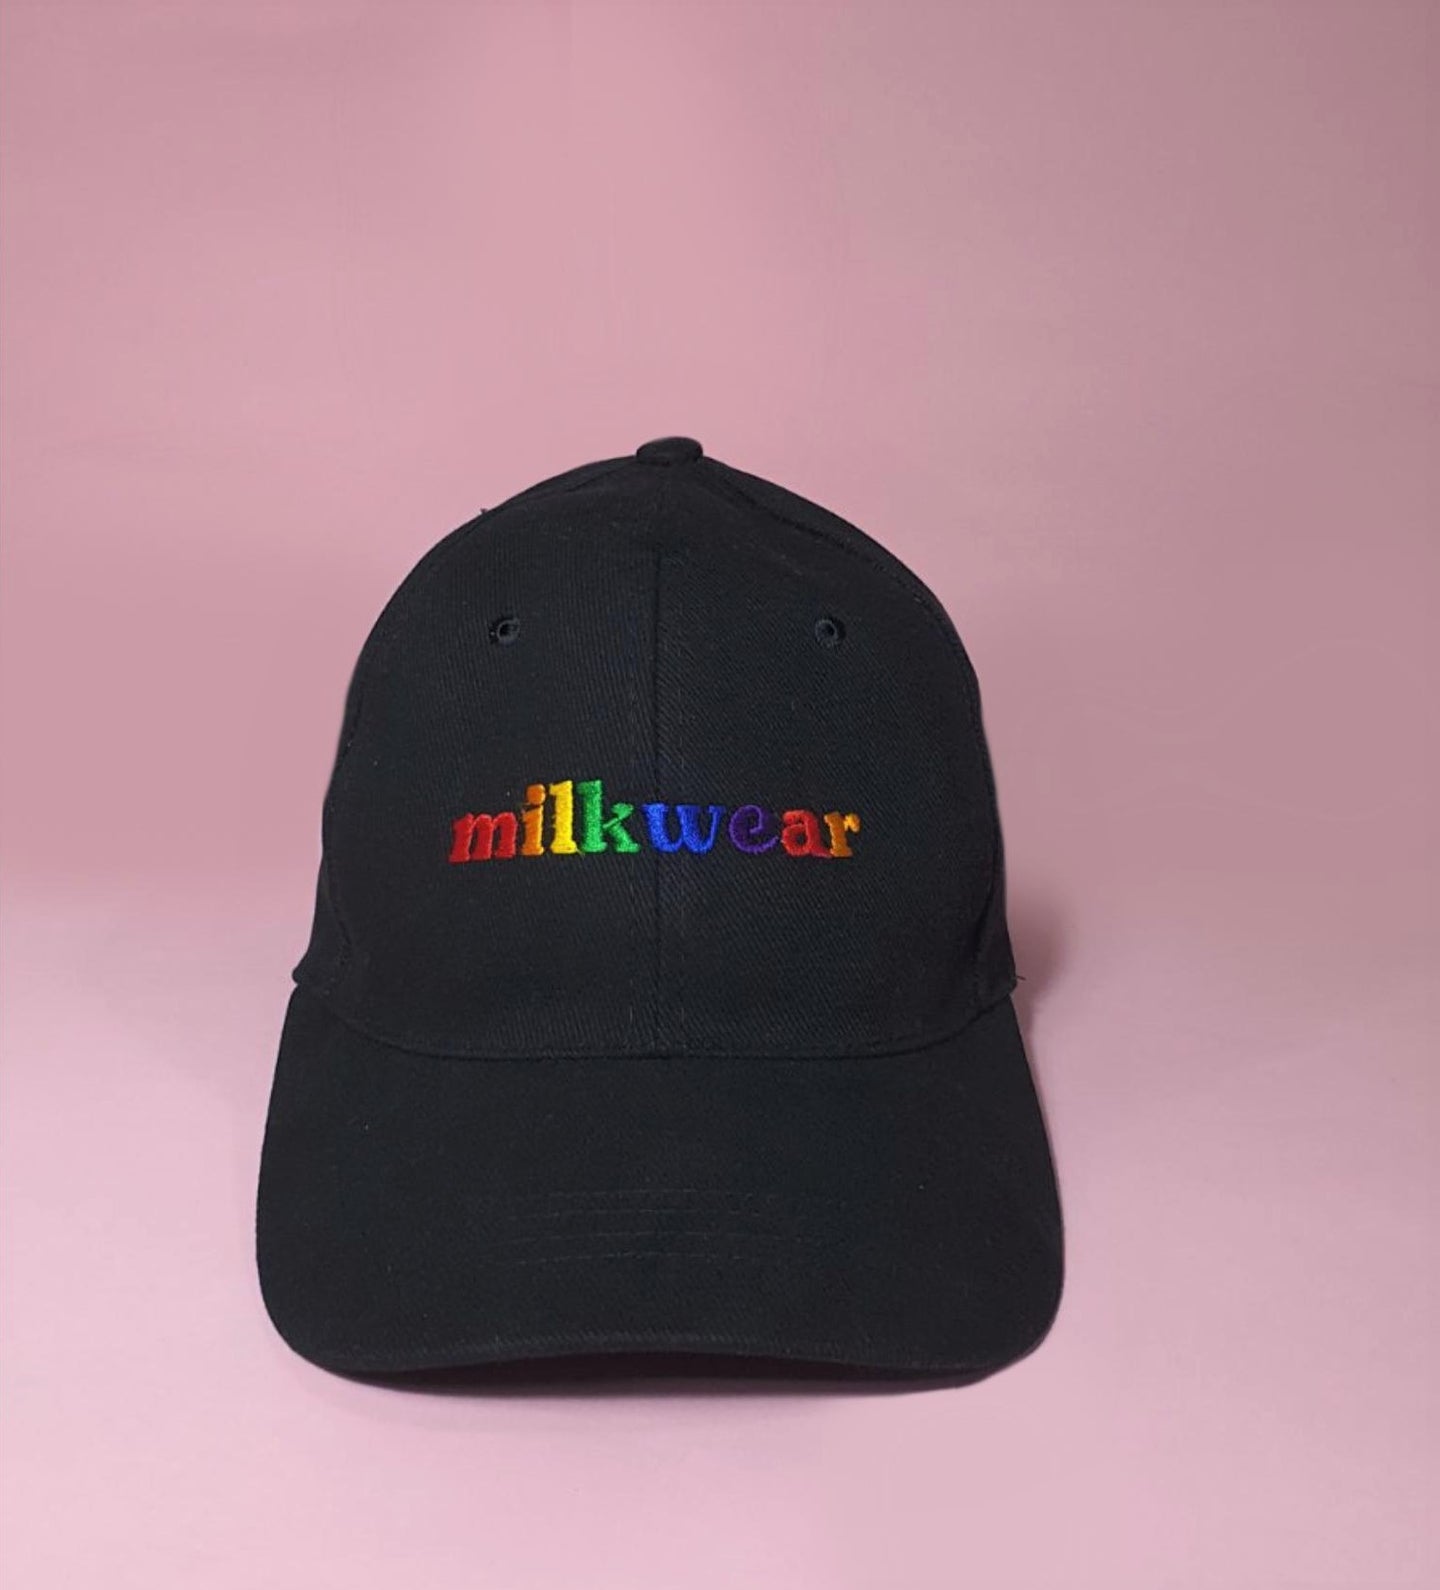 Cap in Black w/ Rainbow Font